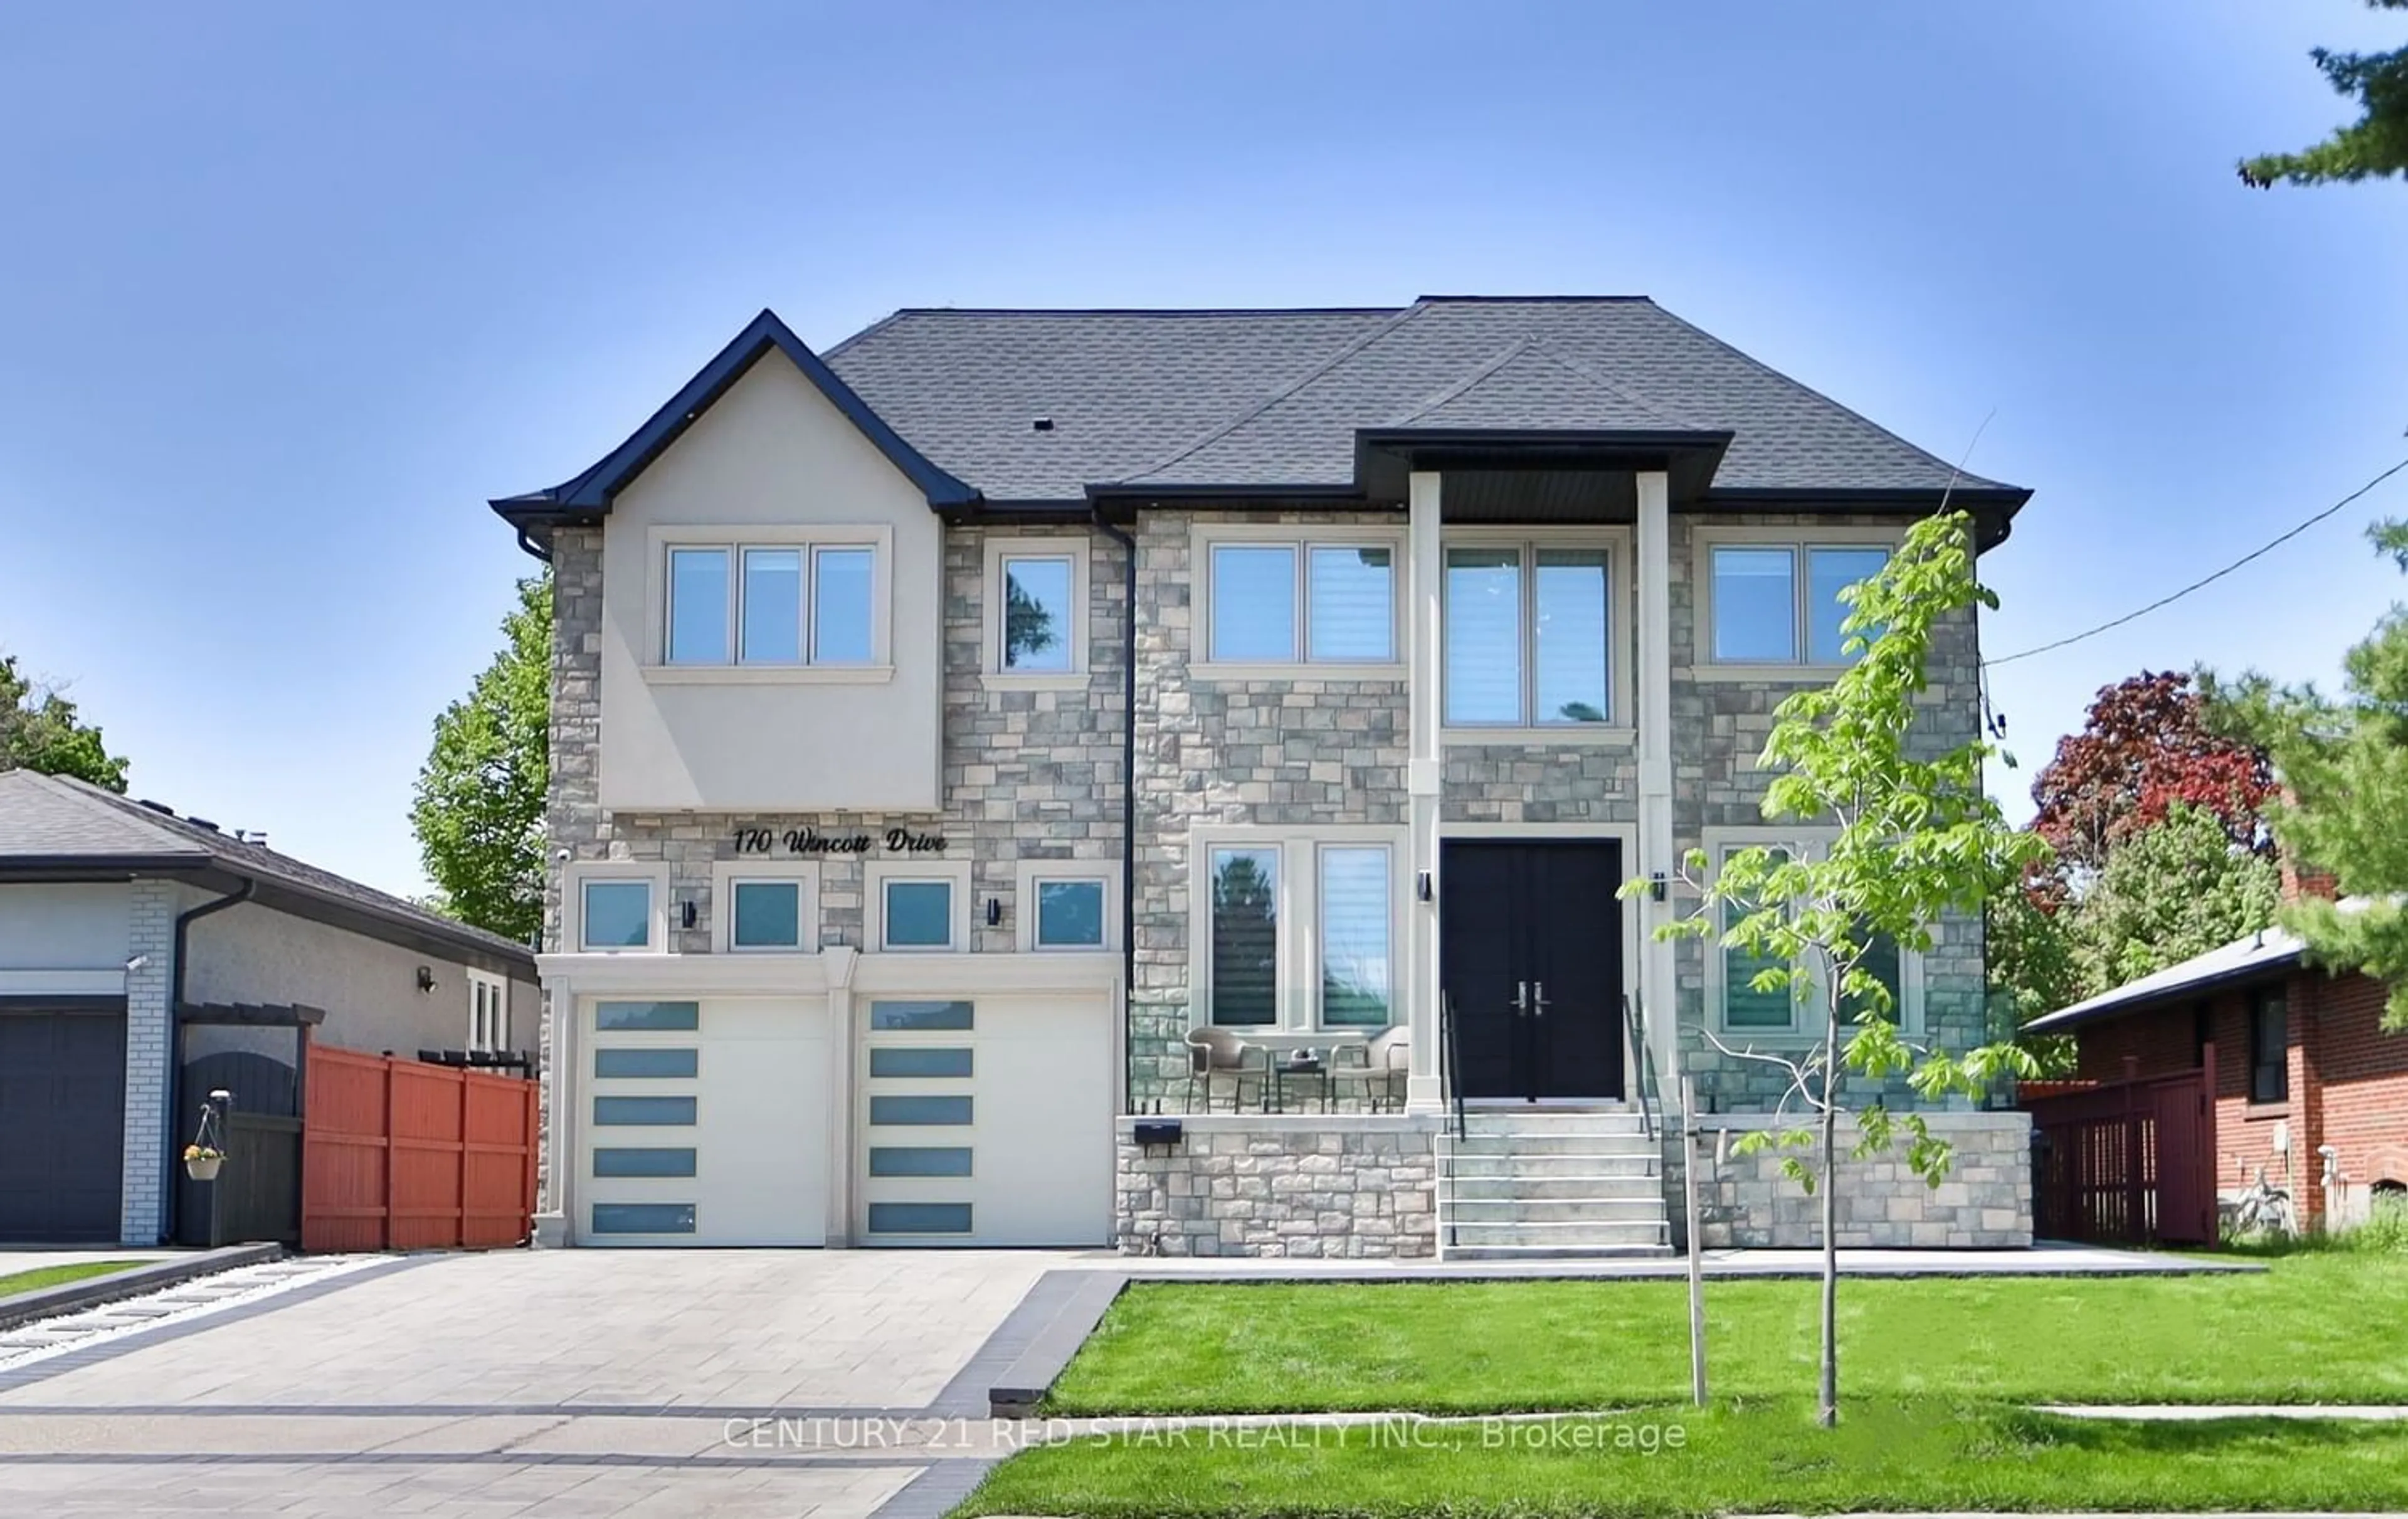 Home with brick exterior material for 170 Wincott Dr, Toronto Ontario M9R 2P8